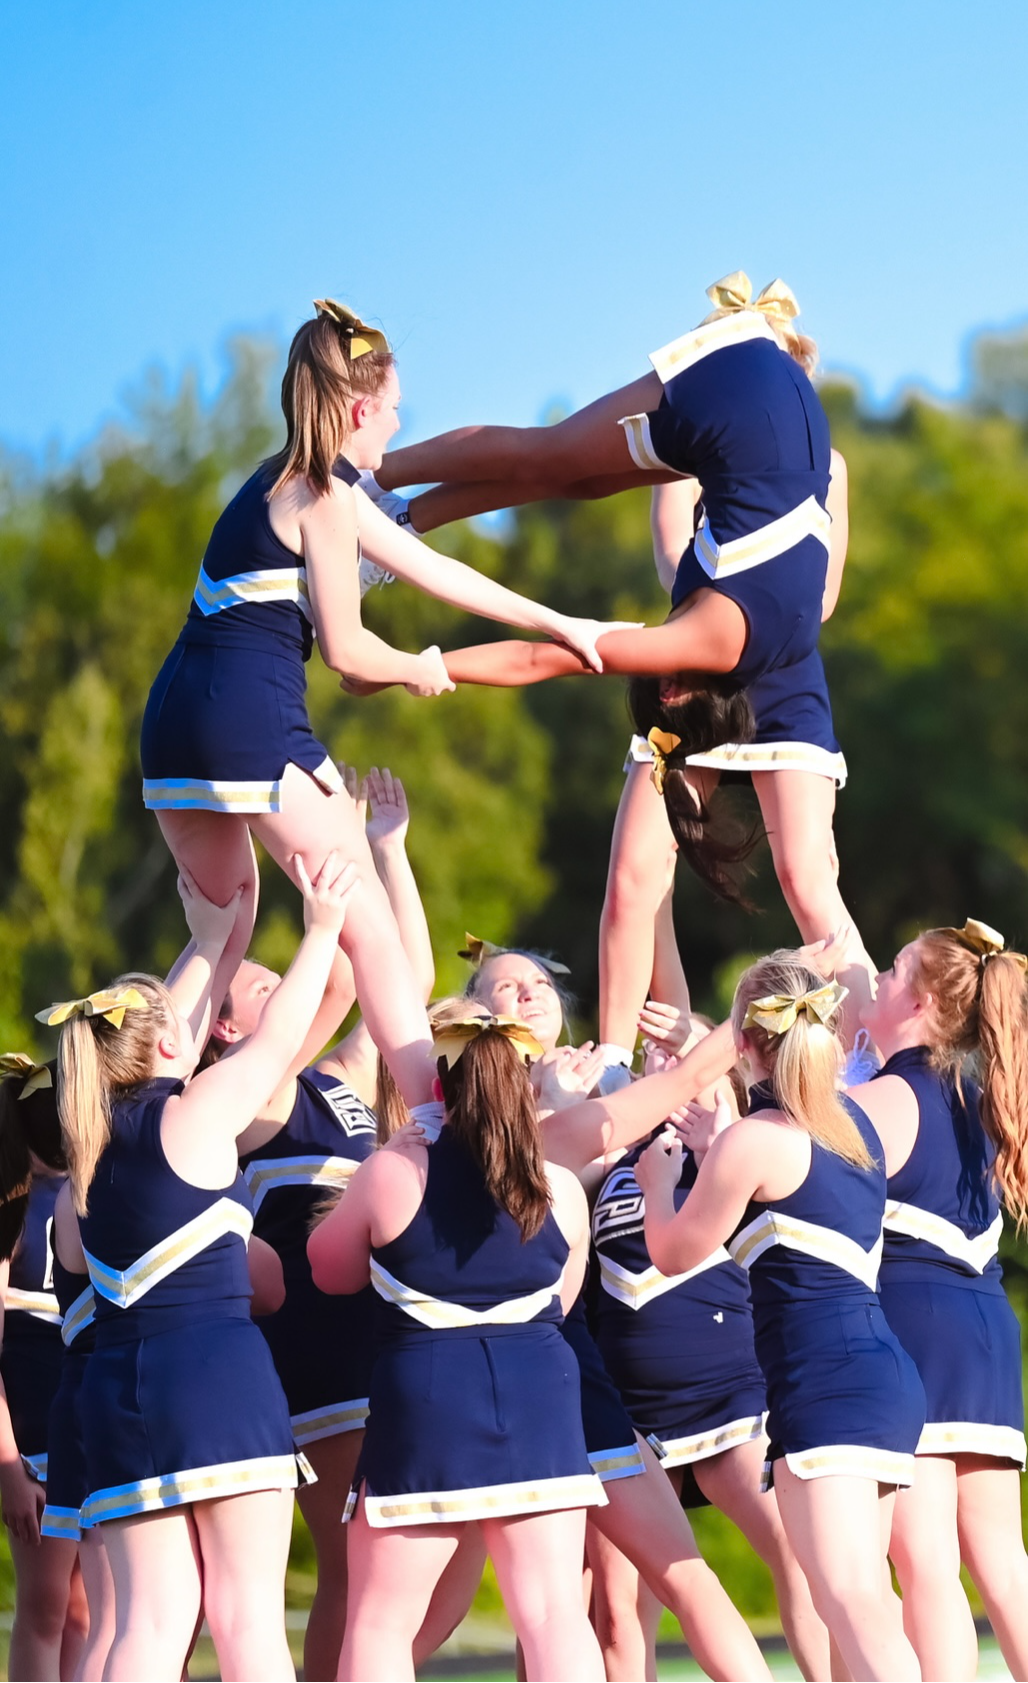 Cheerleaders doing a stunt